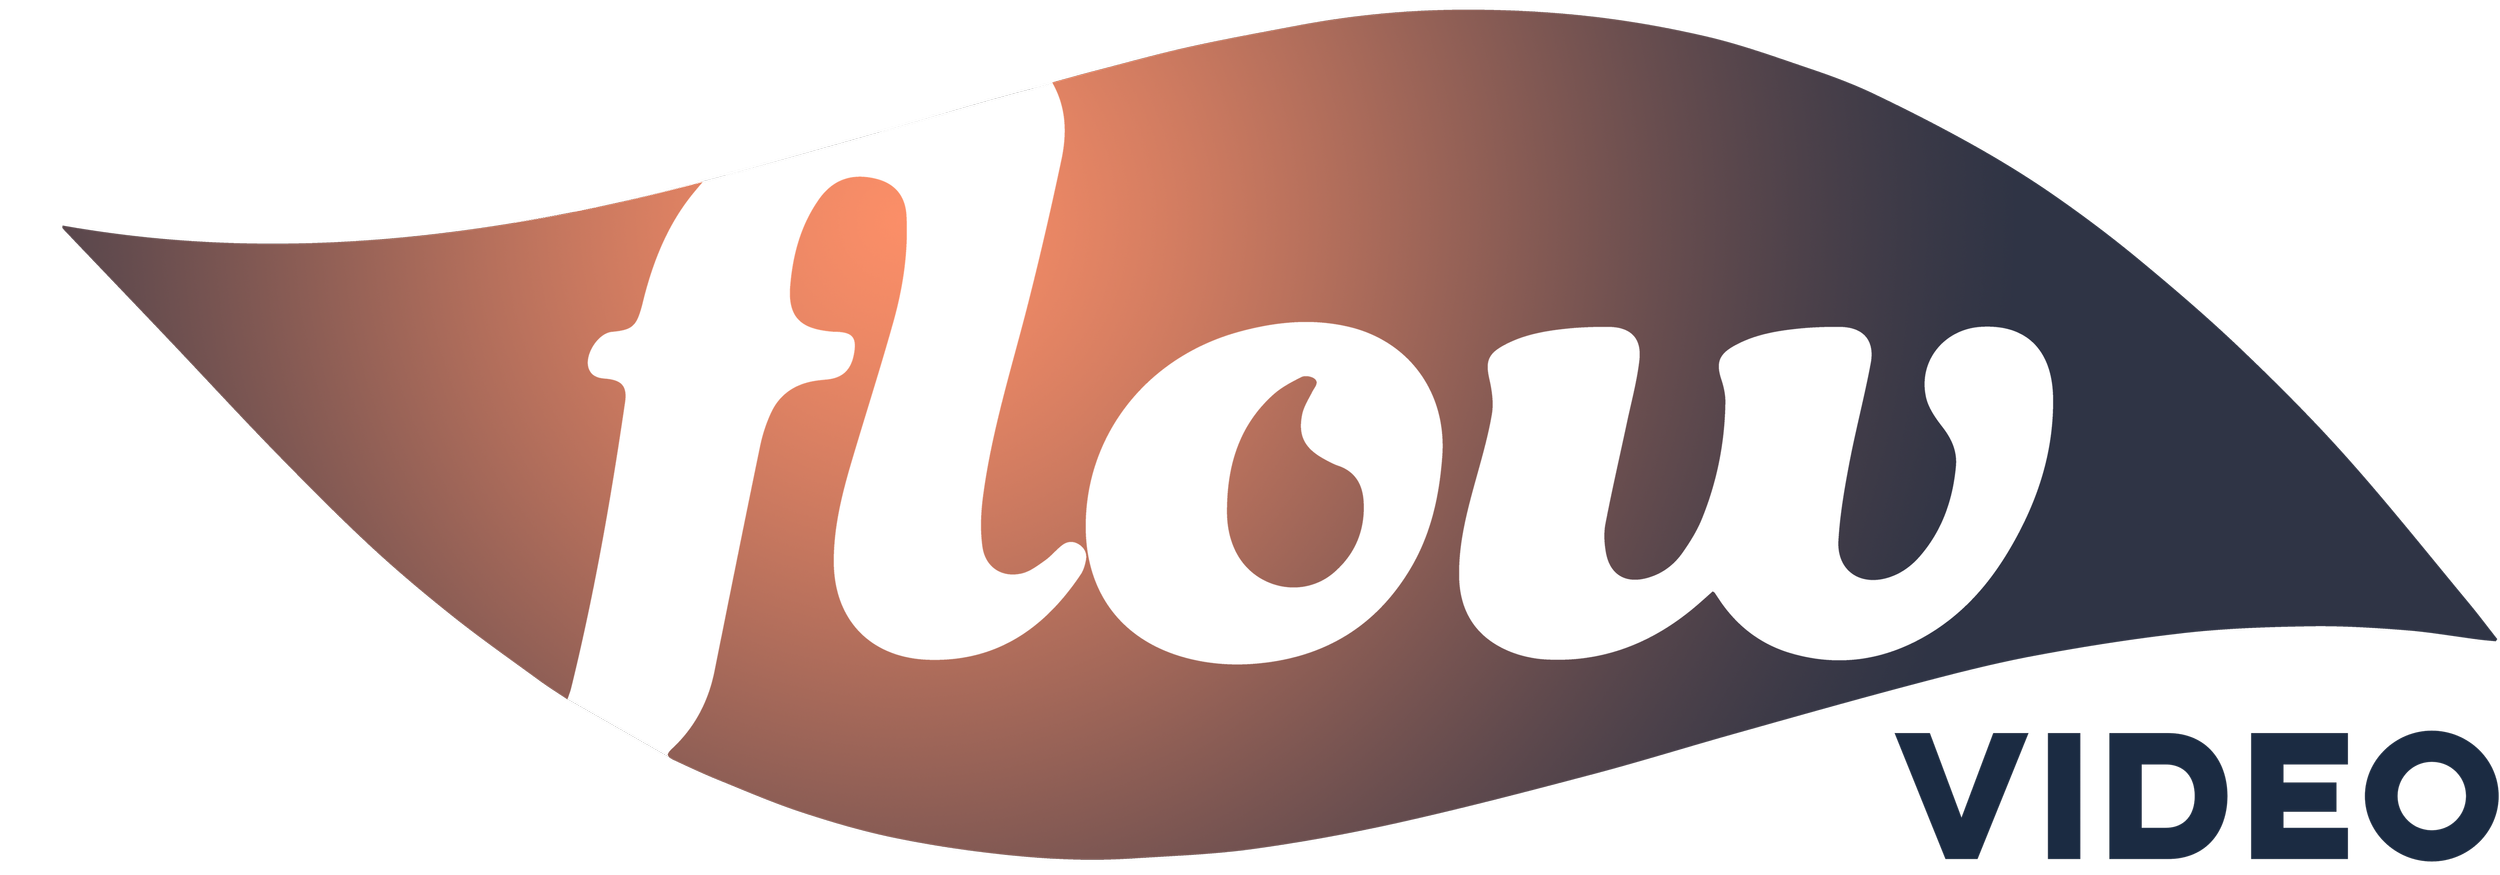 Flow Video Logo - MAIN - Orange Blue - White Center.png